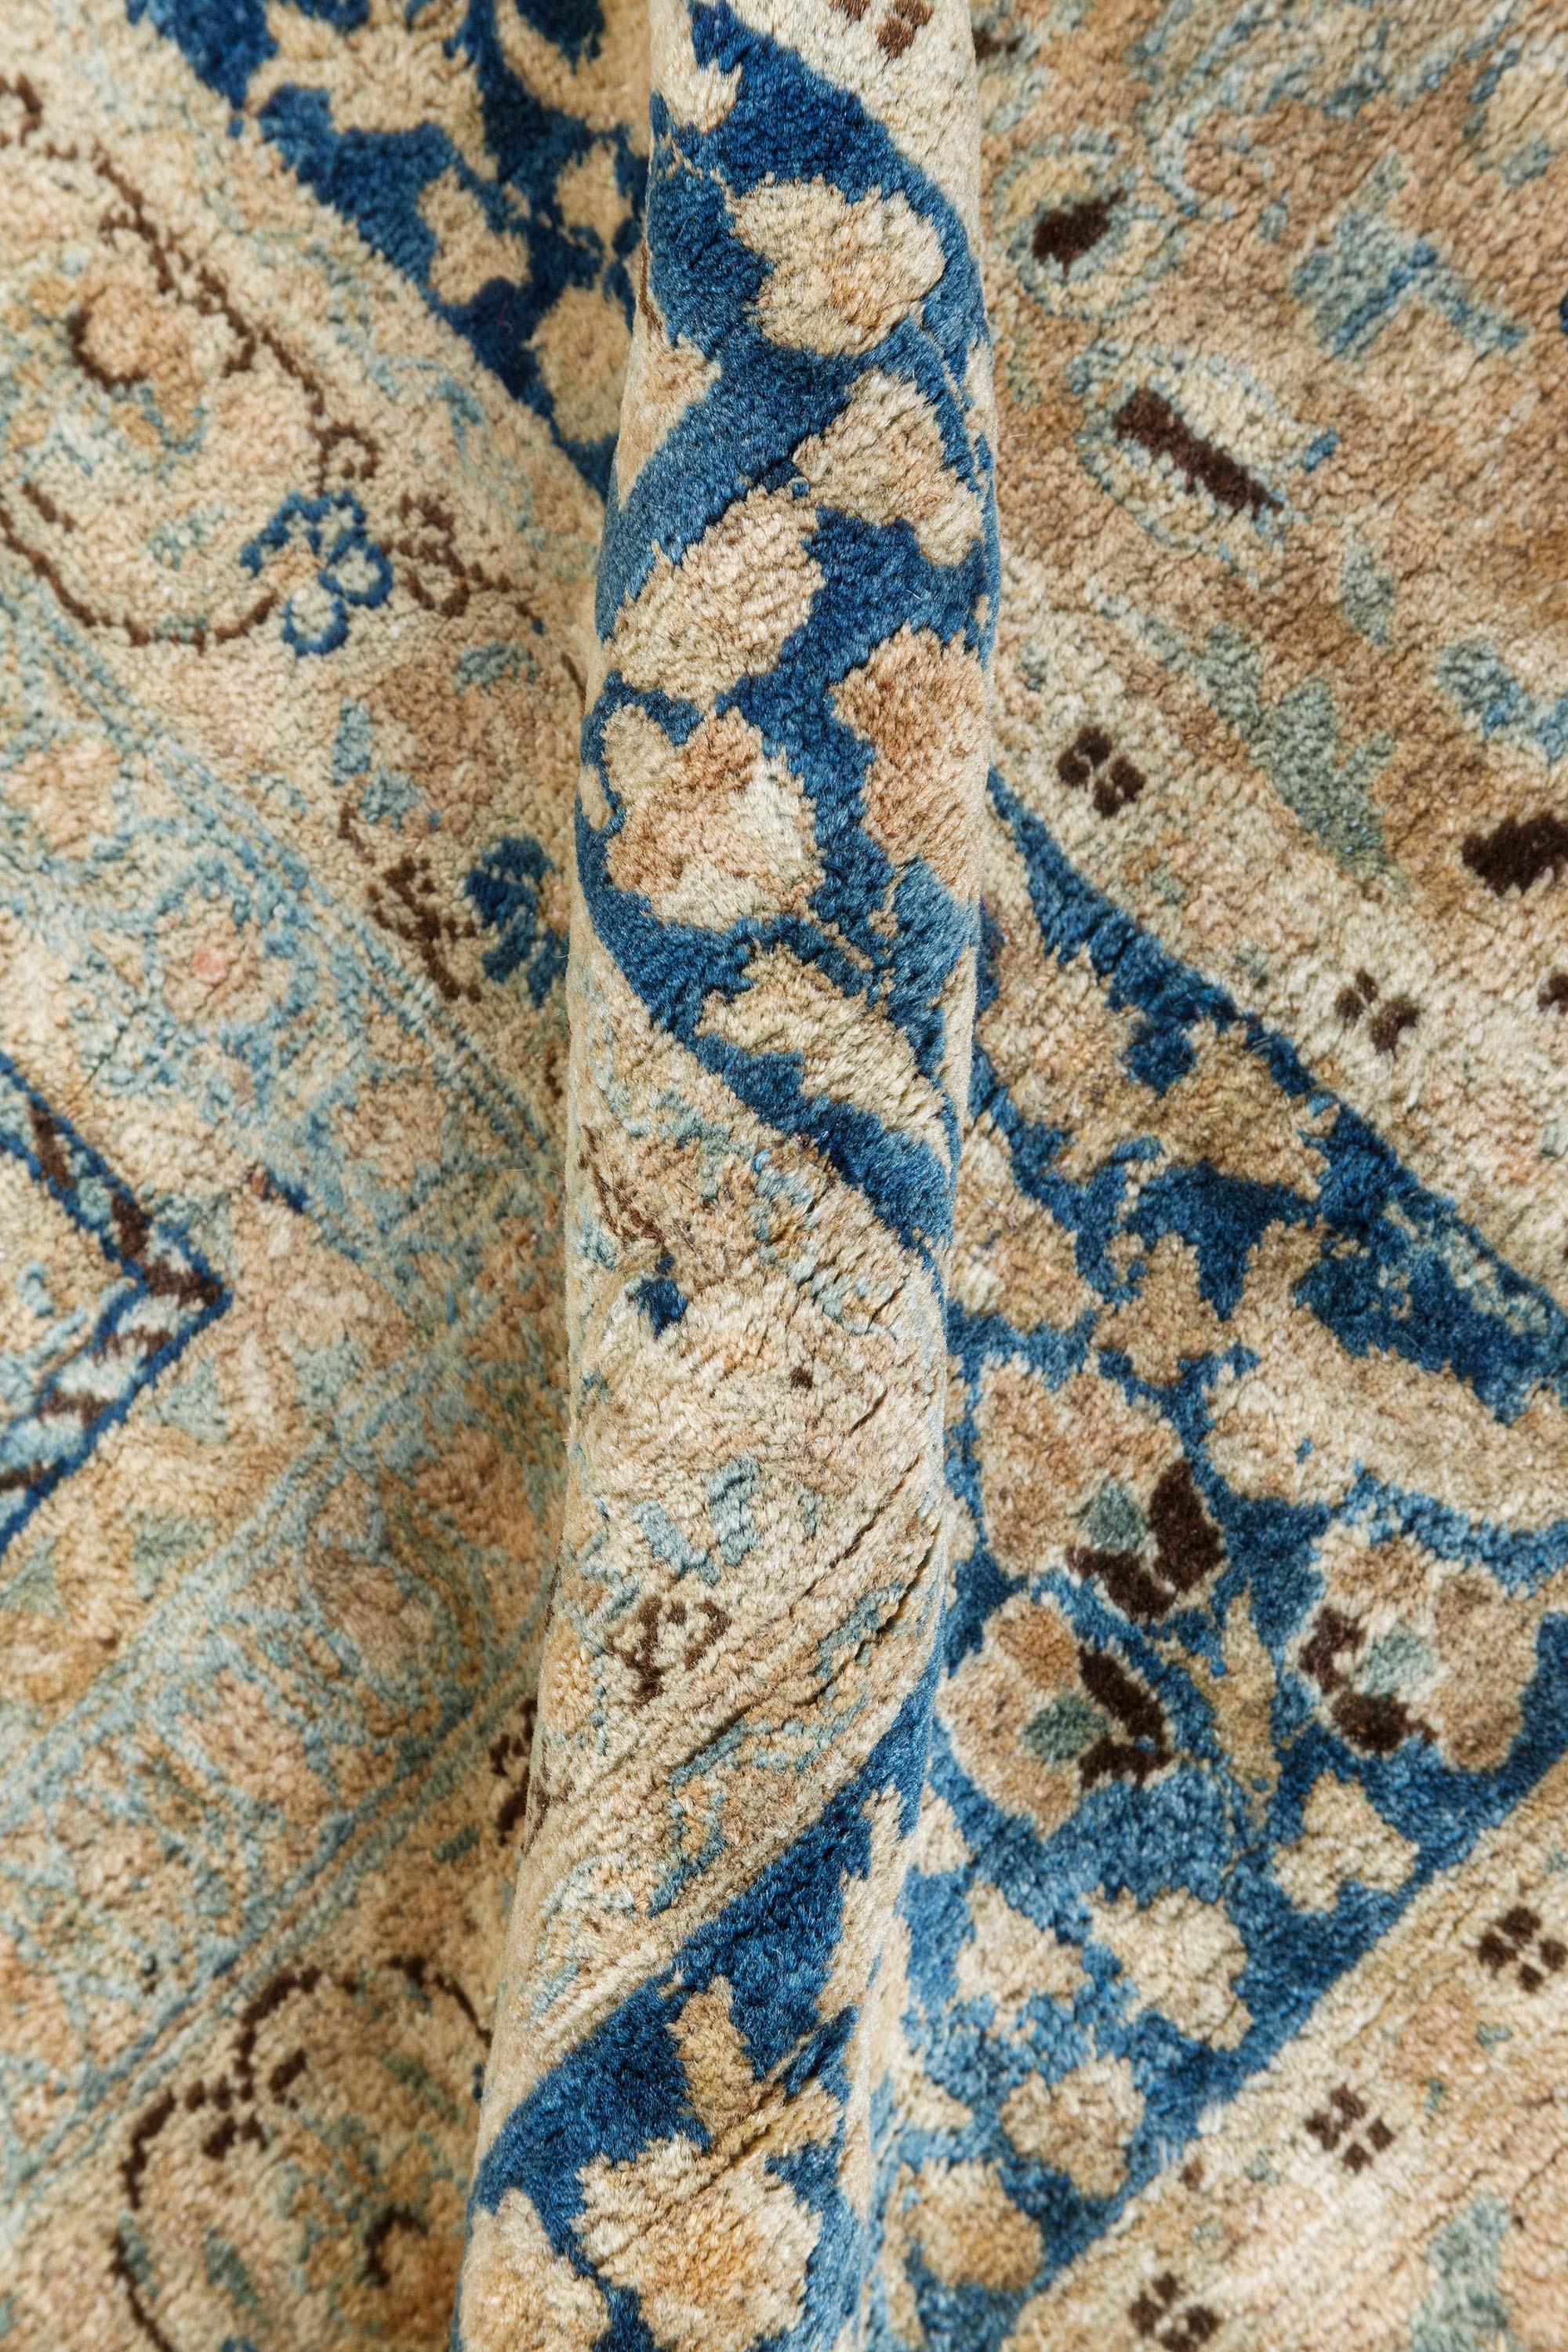 Authentic Persian Meshad handmade wool carpet.
Size: 13'4